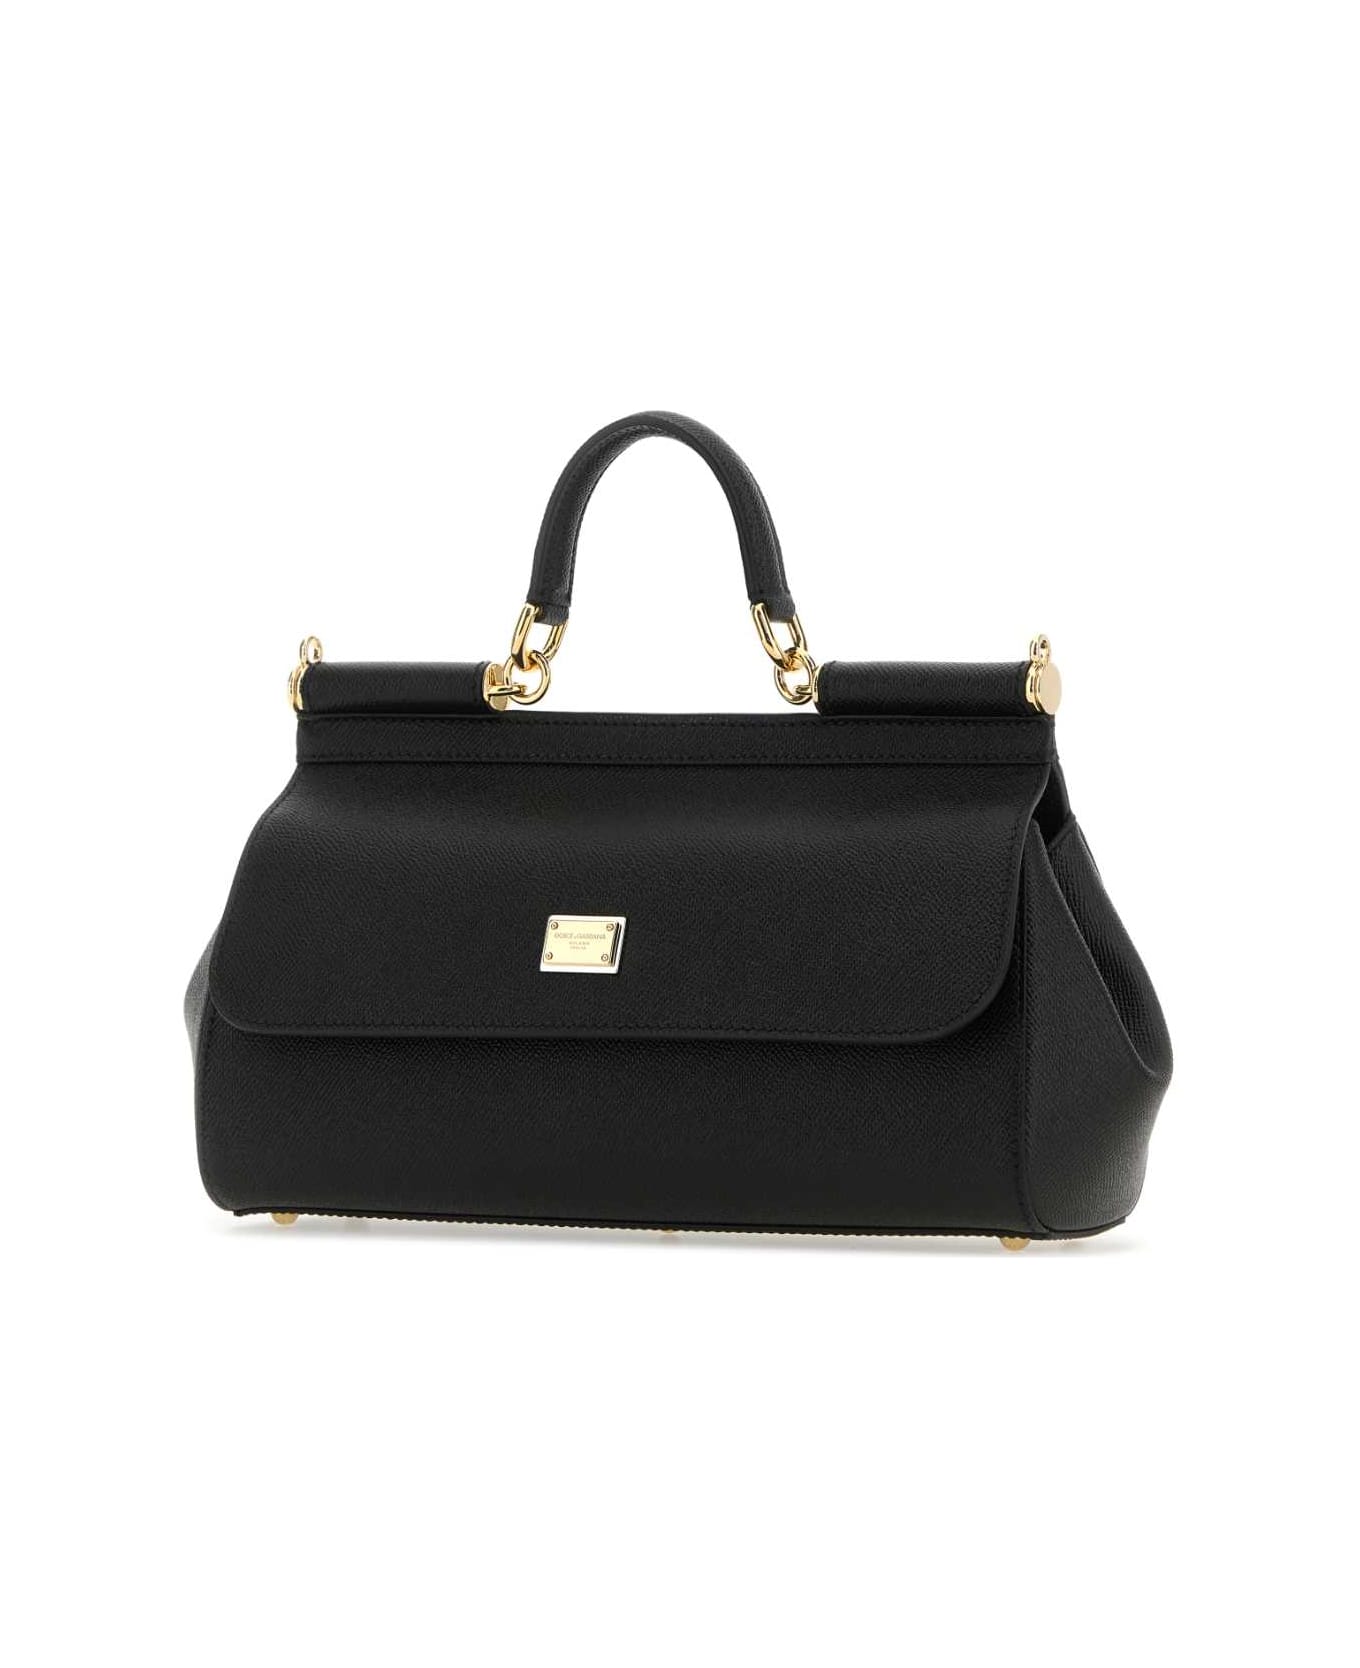 Dolce & Gabbana Black Leather Medium Sicily Handbag - 80999